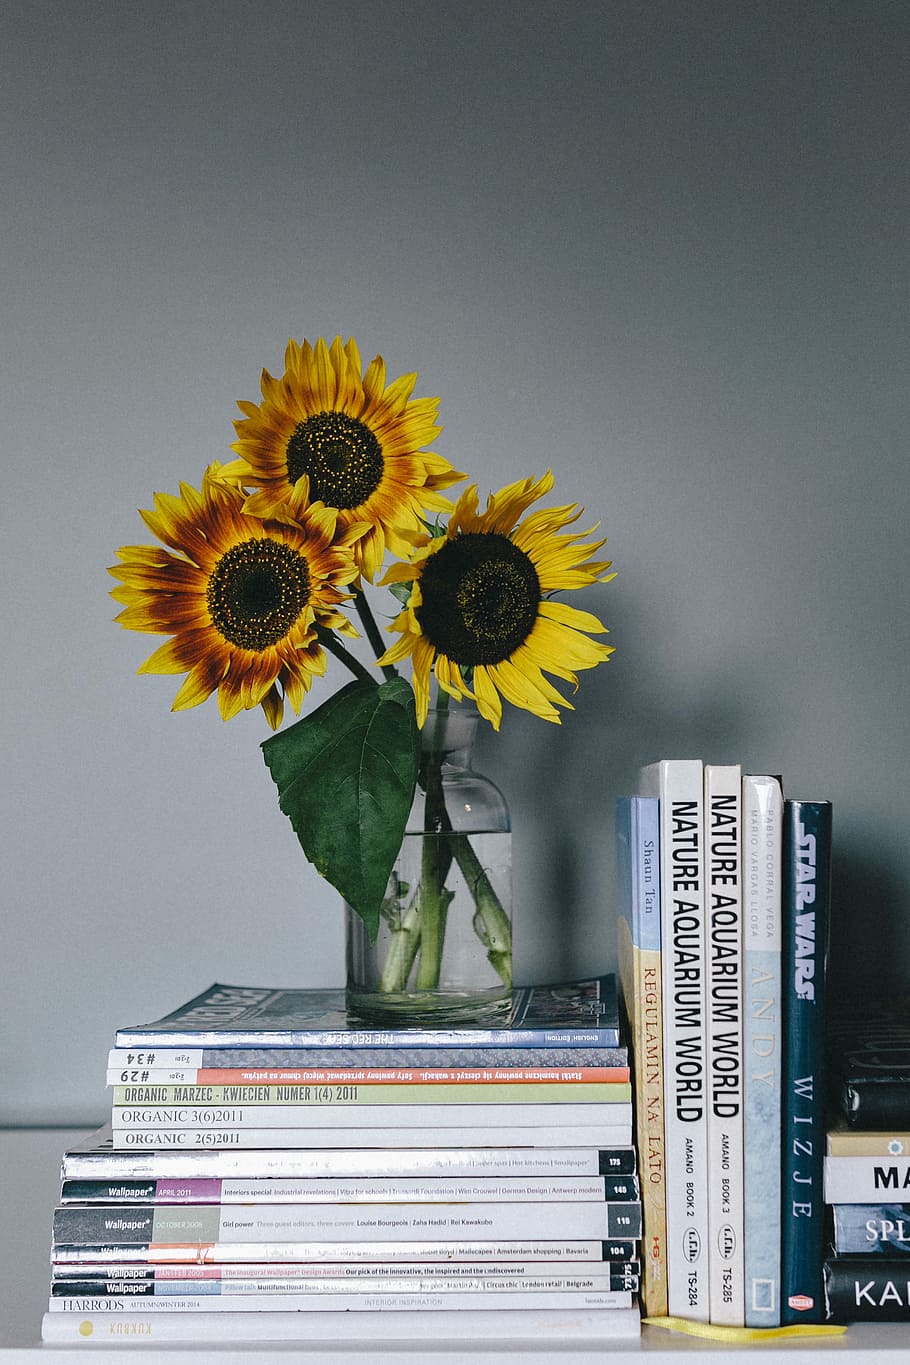 sunflowers and books, Sunflowers, books, flower, magazines, sunflower, indoor, business, book, stack